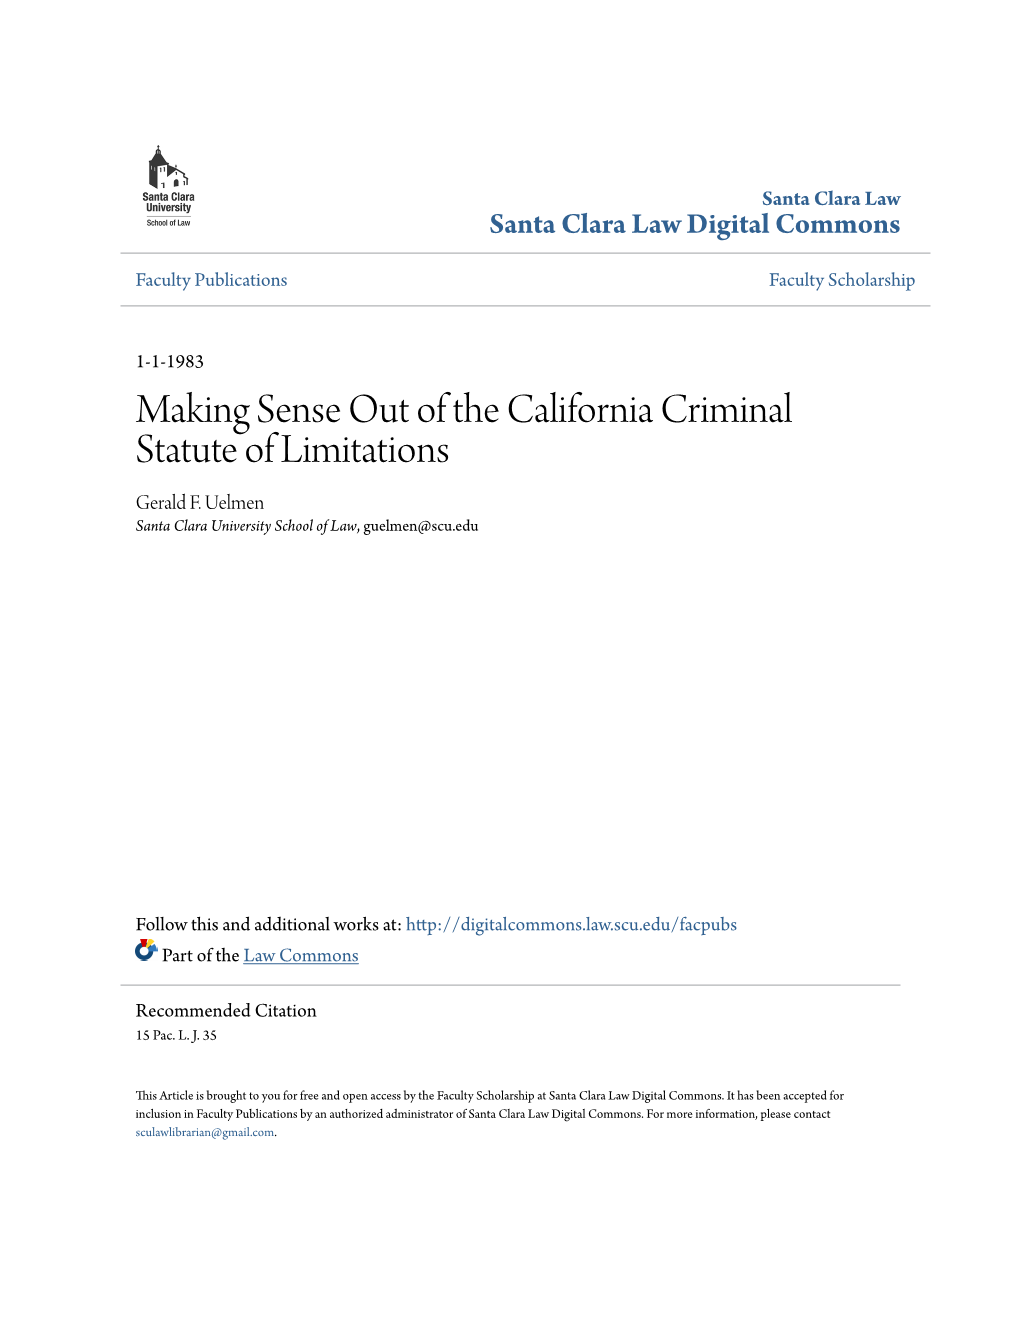 Making Sense out of the California Criminal Statute of Limitations Gerald F